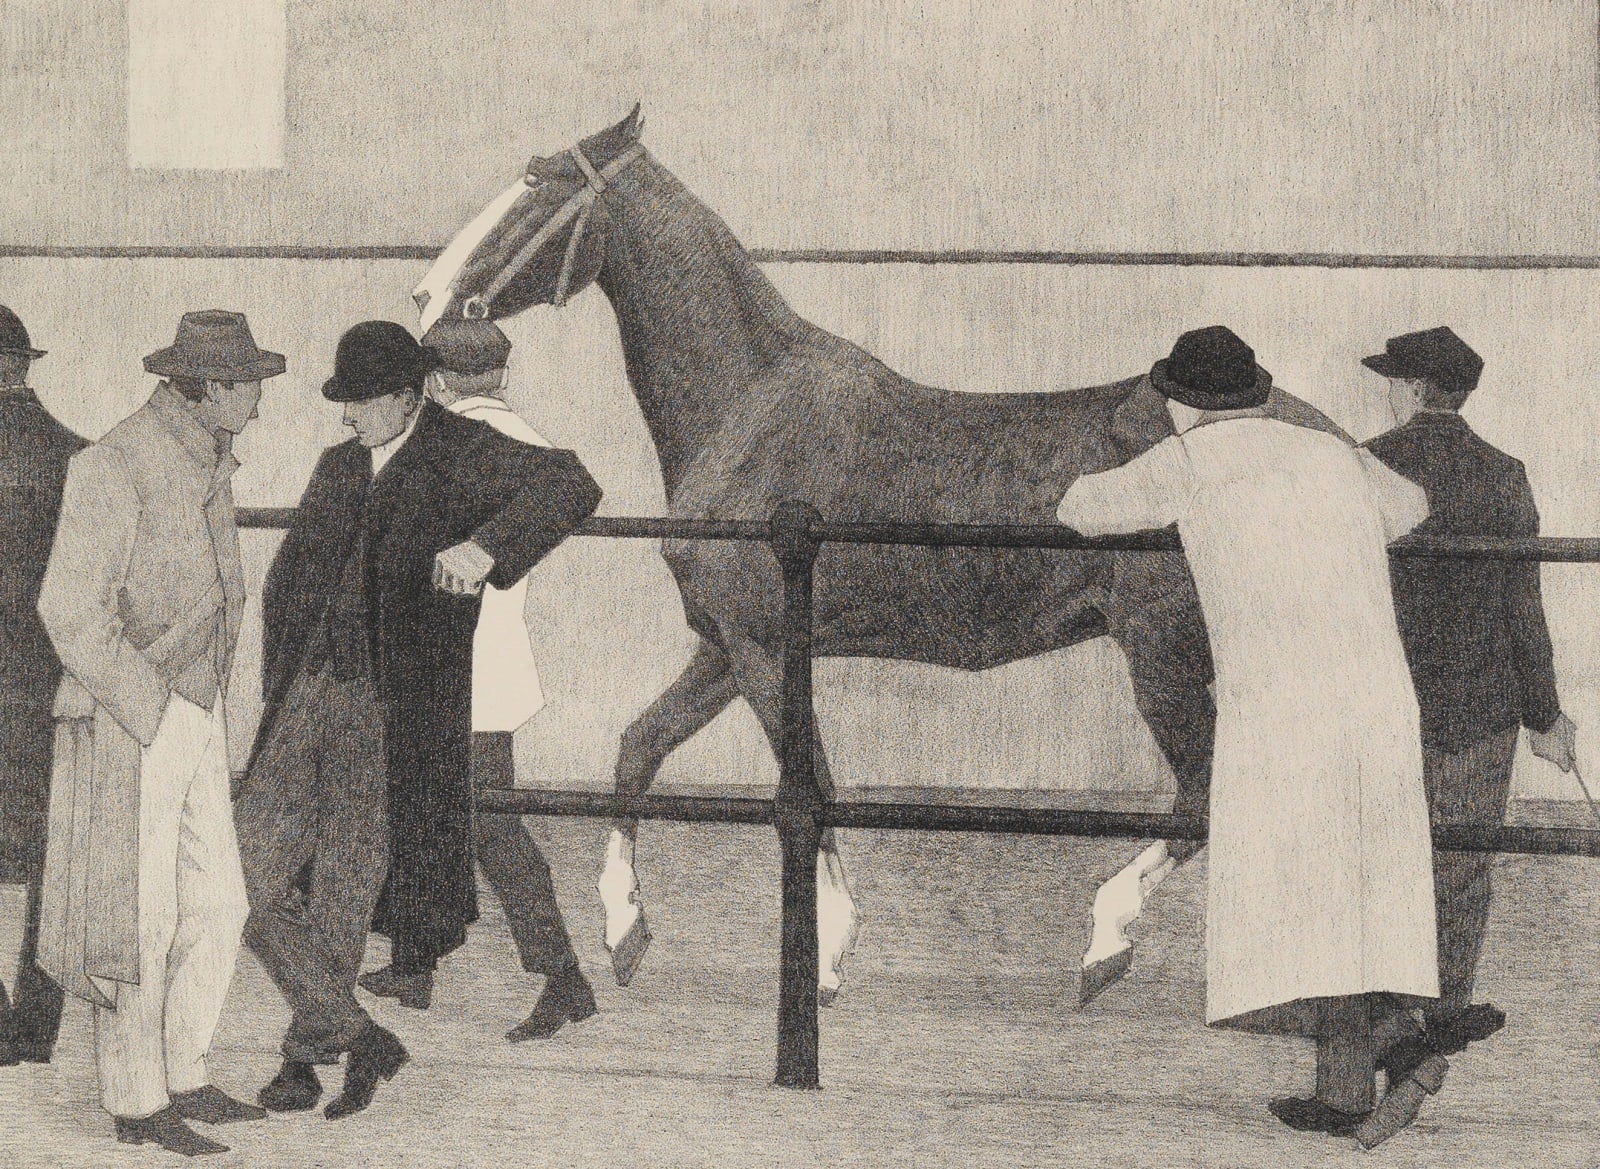 ROBERT POLHILL BEVAN, Horse Dealers (Ward's Repository No 1), 1919